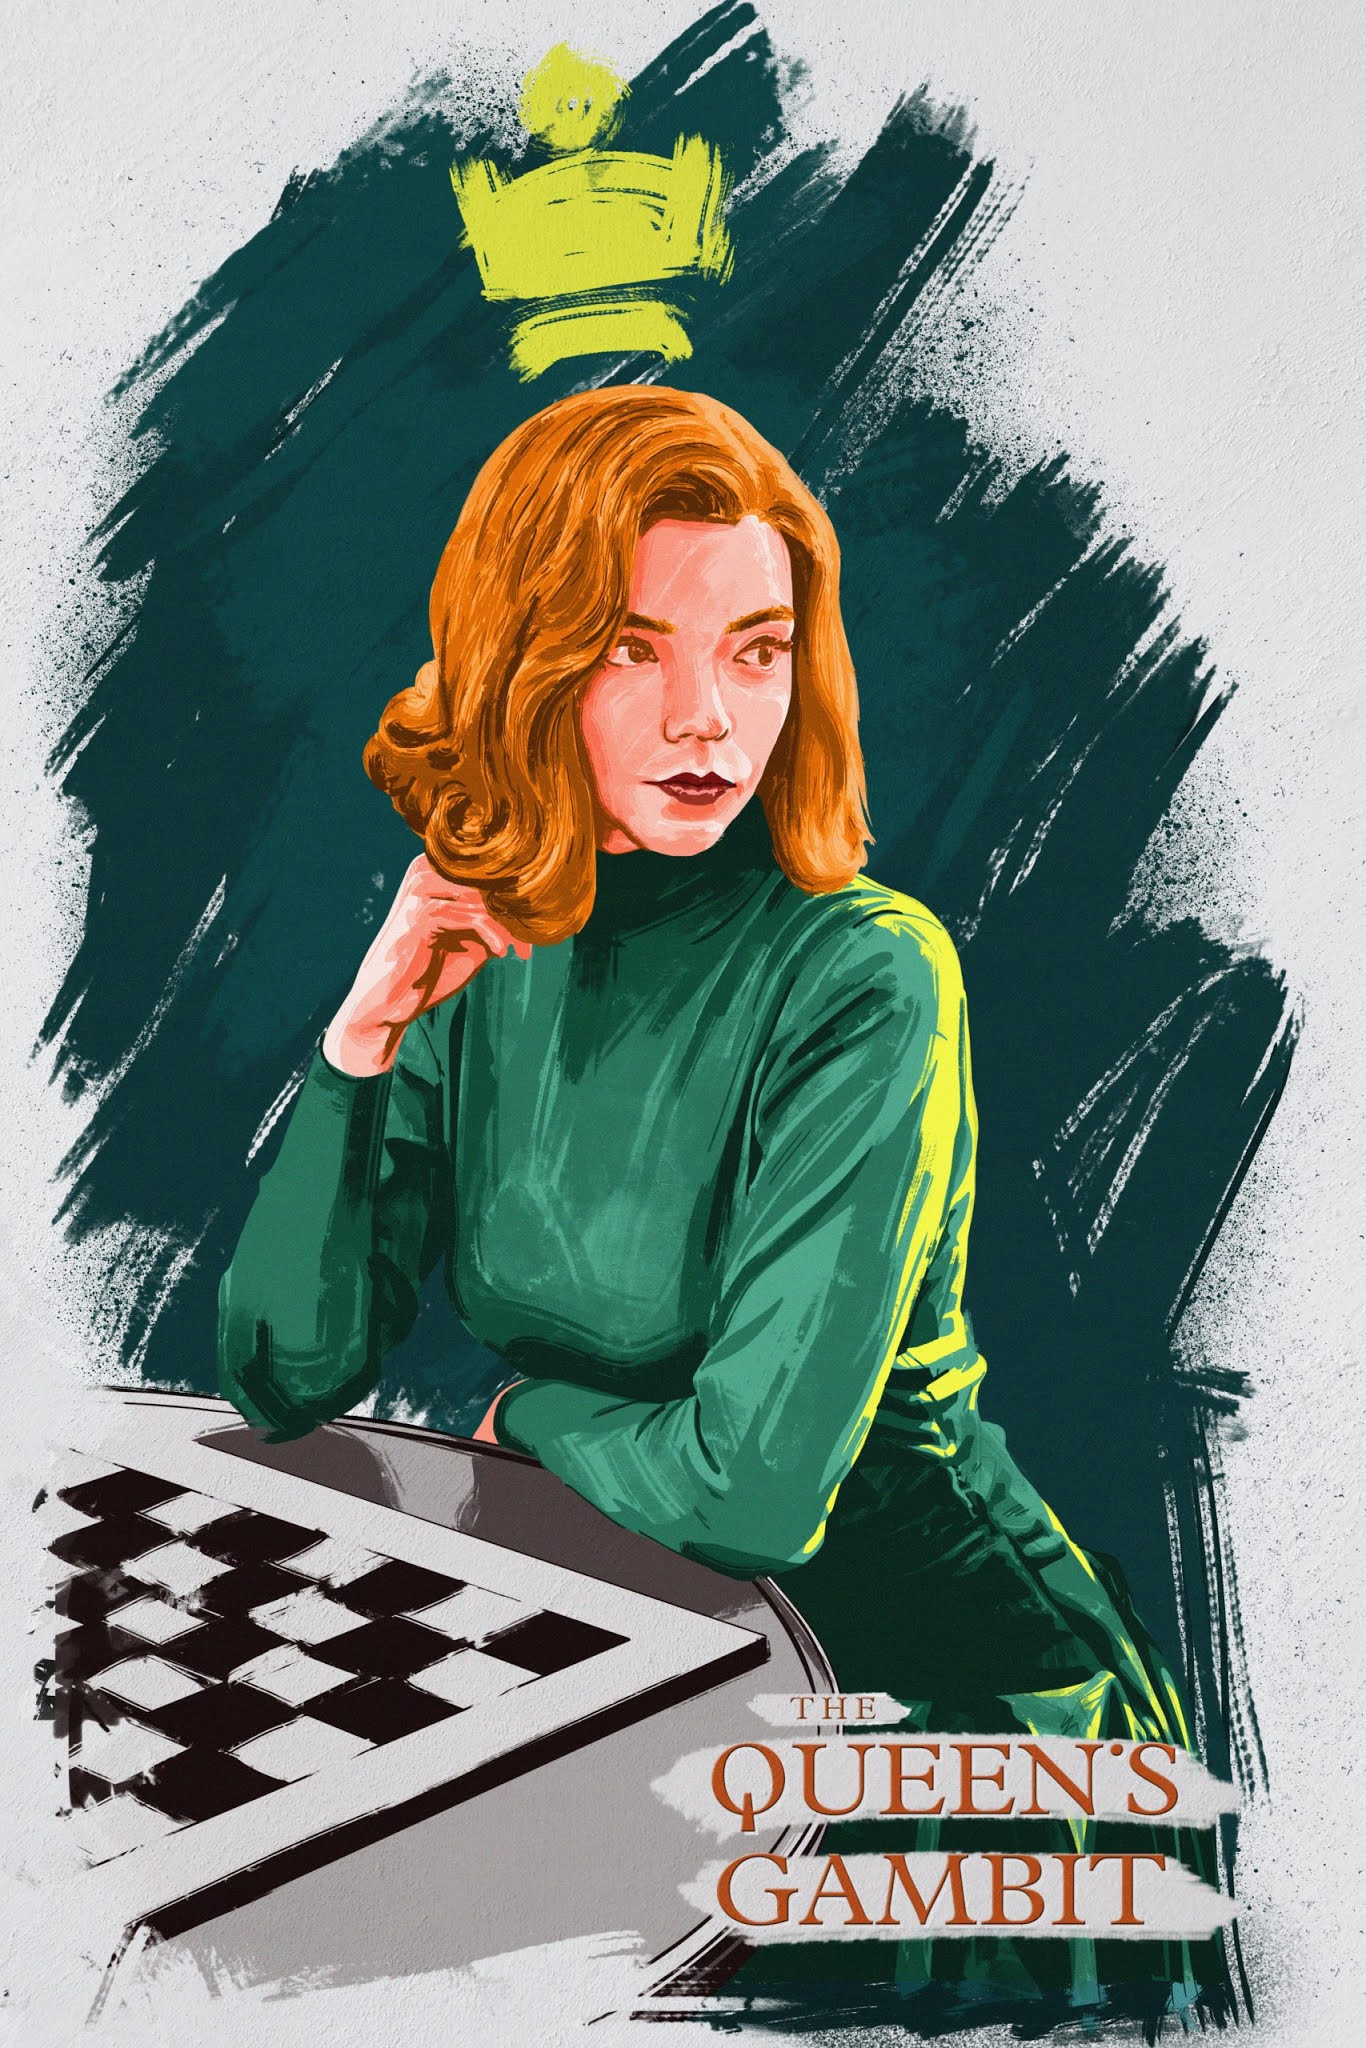 Beth Harmon  The Queen's Gambit, an art print by Laura Rianna